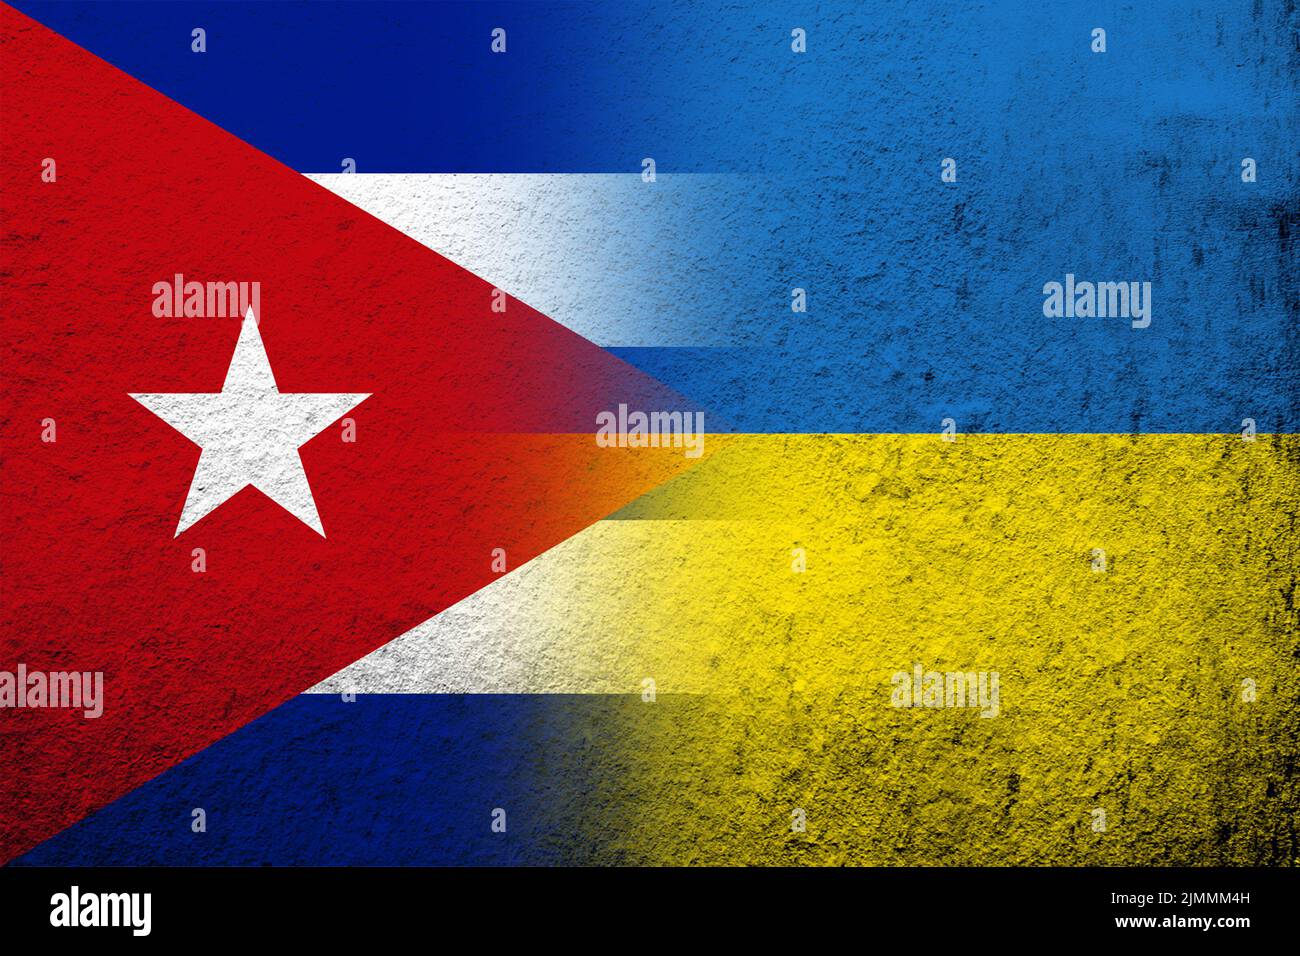 The Republic of Cuba National flag with National flag of Ukraine. Grunge background Stock Photo